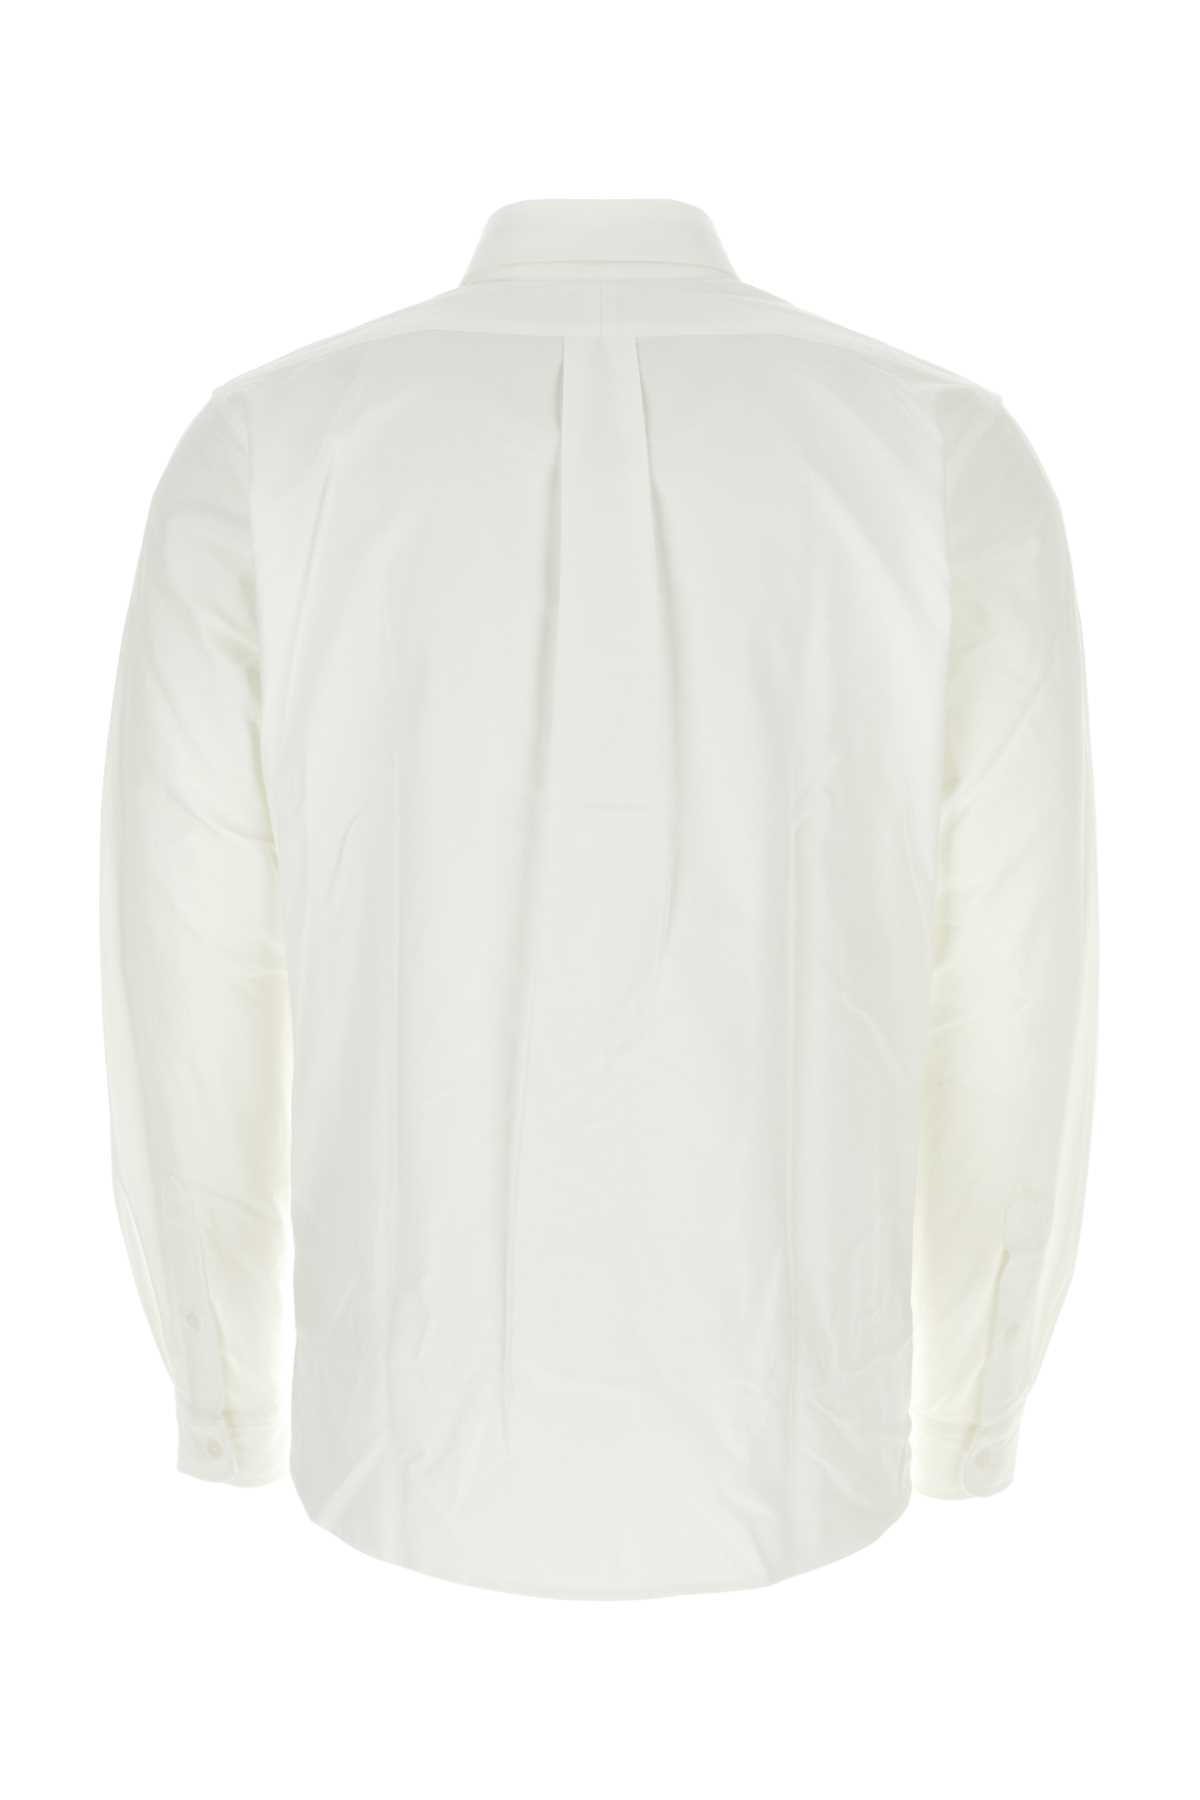 Kenzo White Cotton Shirt In 01